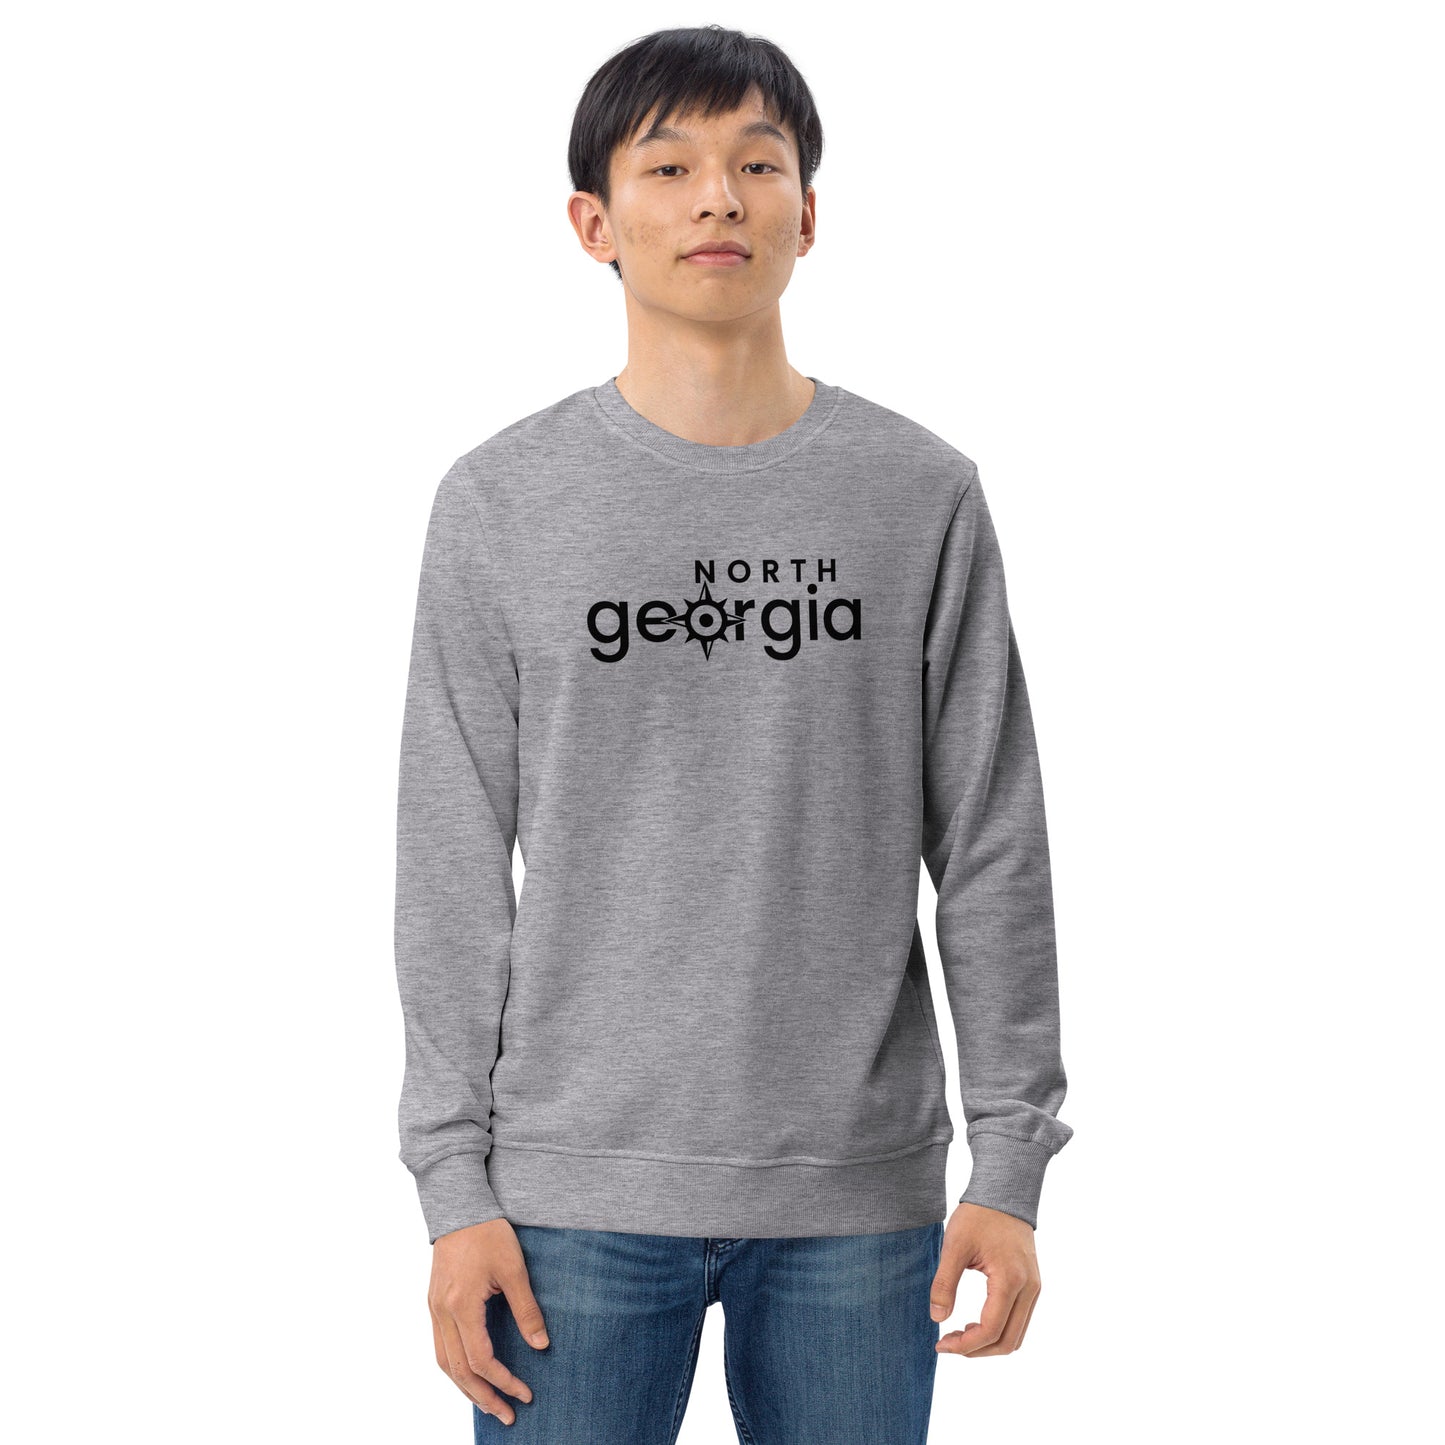 North Georgia Organic Sweatshirt